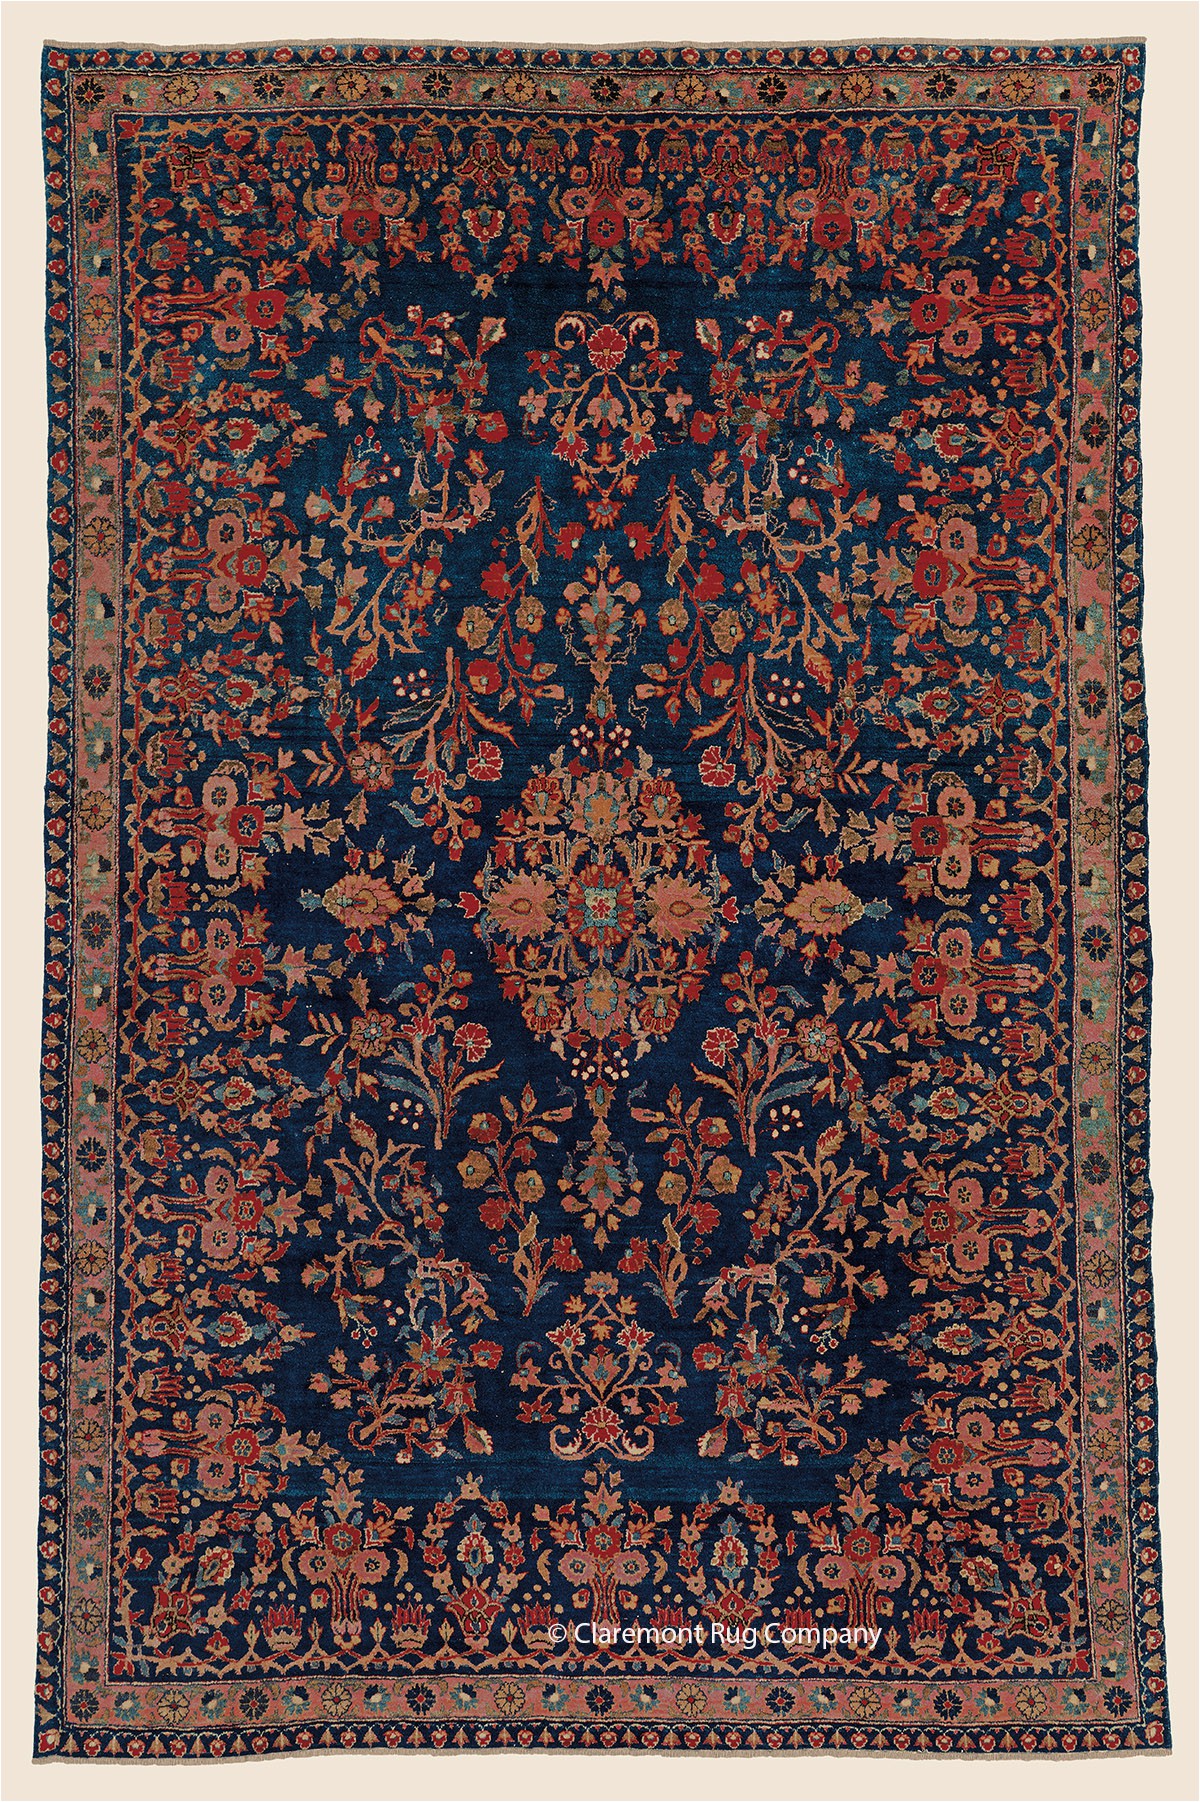 Antique Blue oriental Rug Antique Persian Manchester Kashan Indigo Floral Decorative